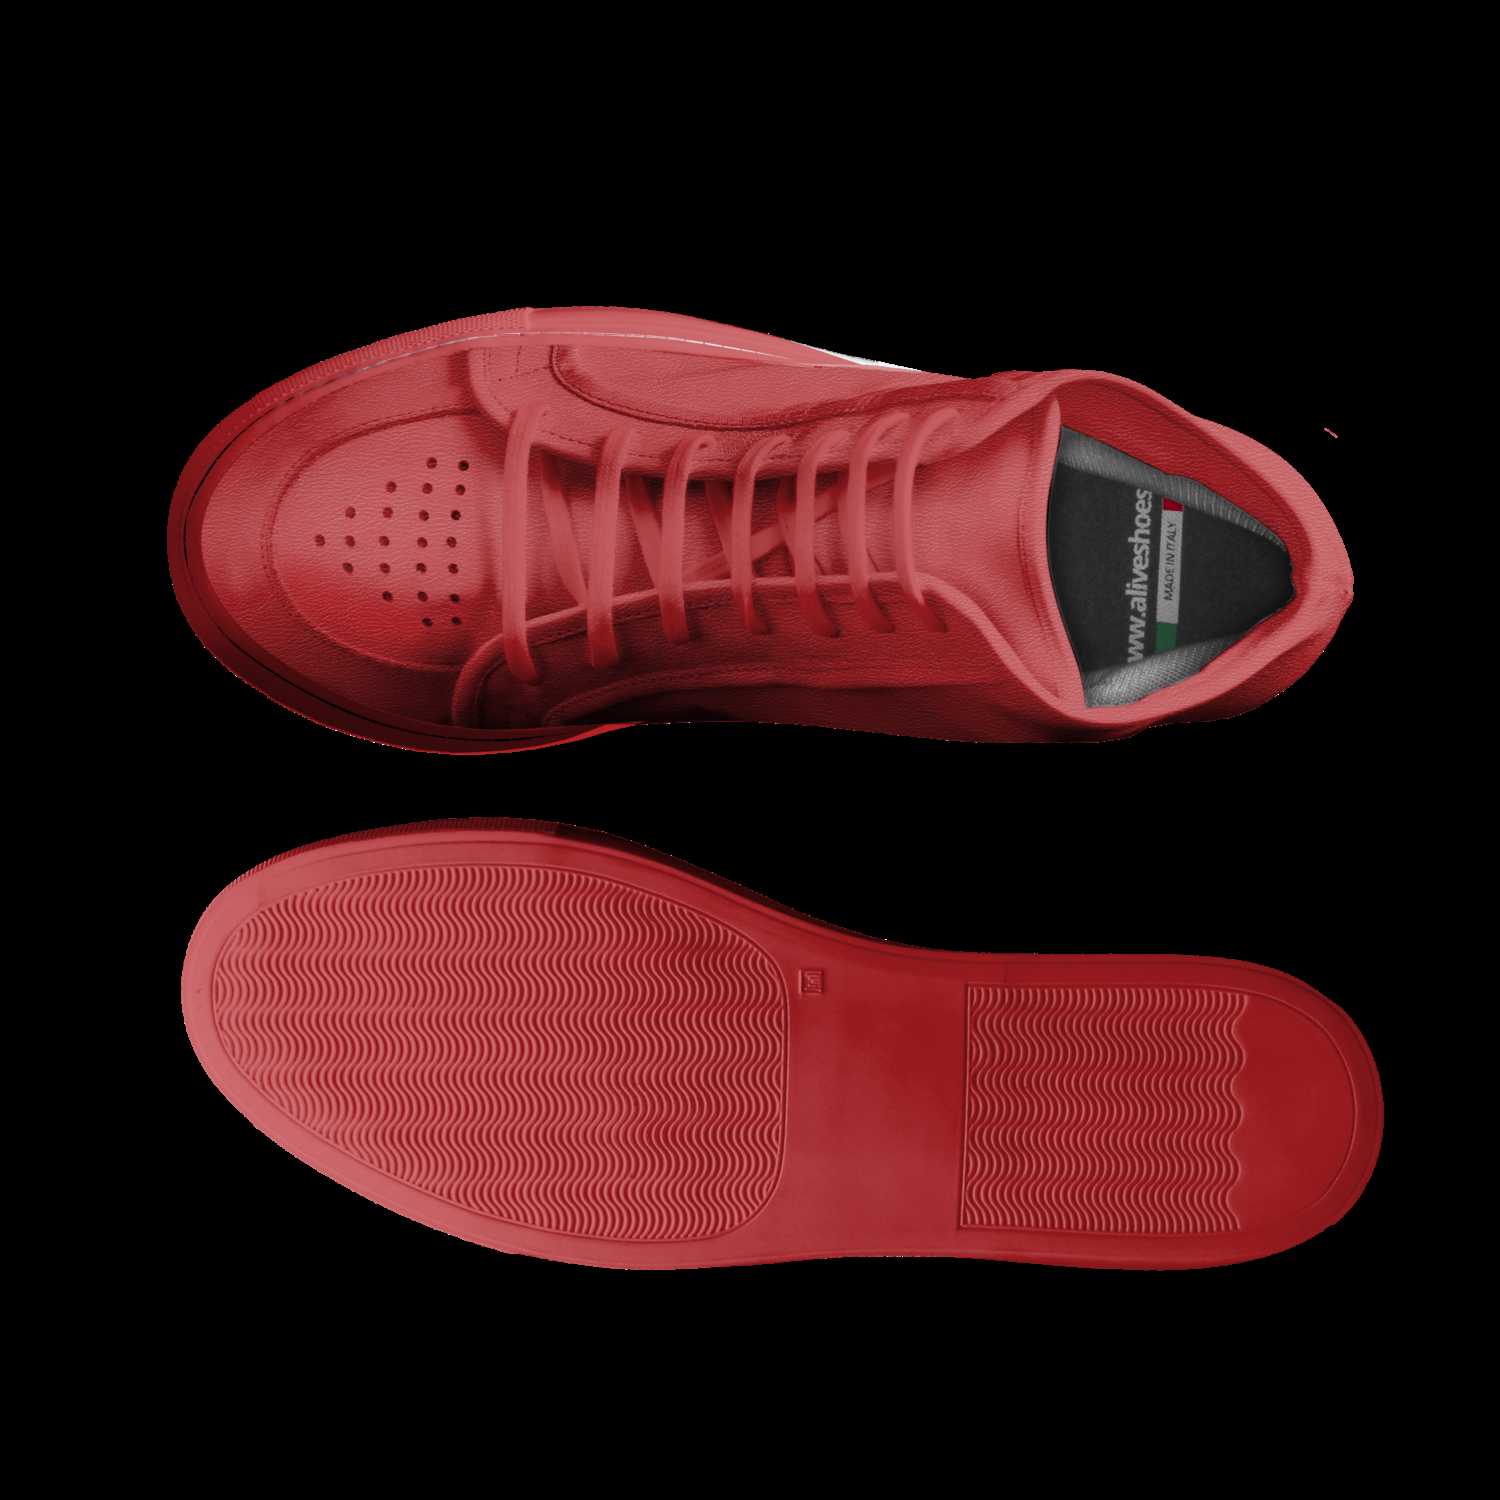 Zara Man Low Triple Red Sneaker Shoes Men's 10.5 US 44 EU Lace Up Casual |  eBay